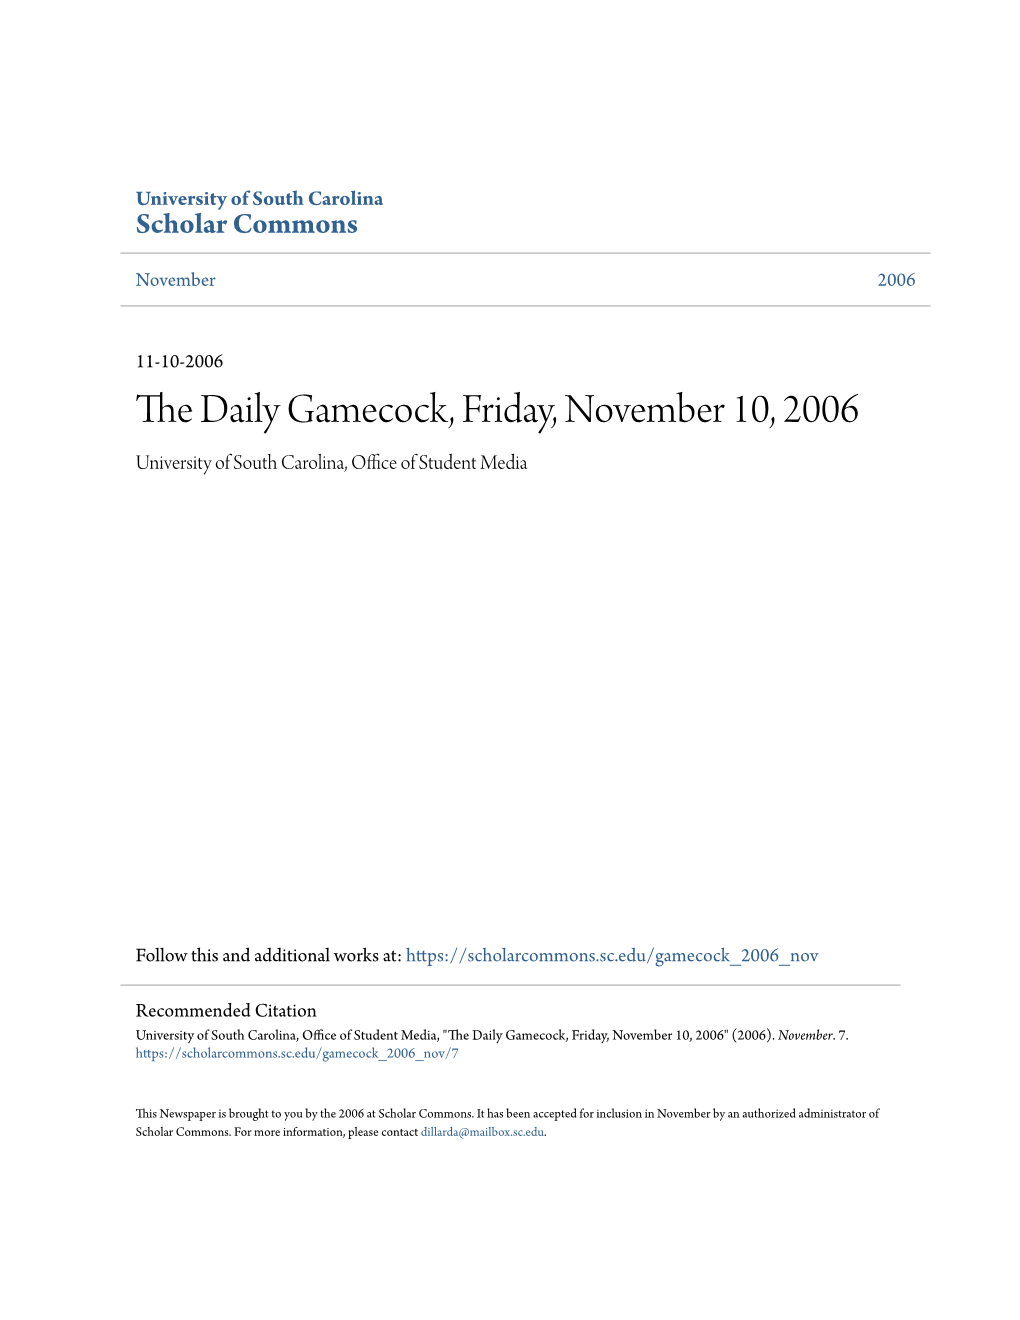 The Daily Gamecock, Friday, November 10, 2006